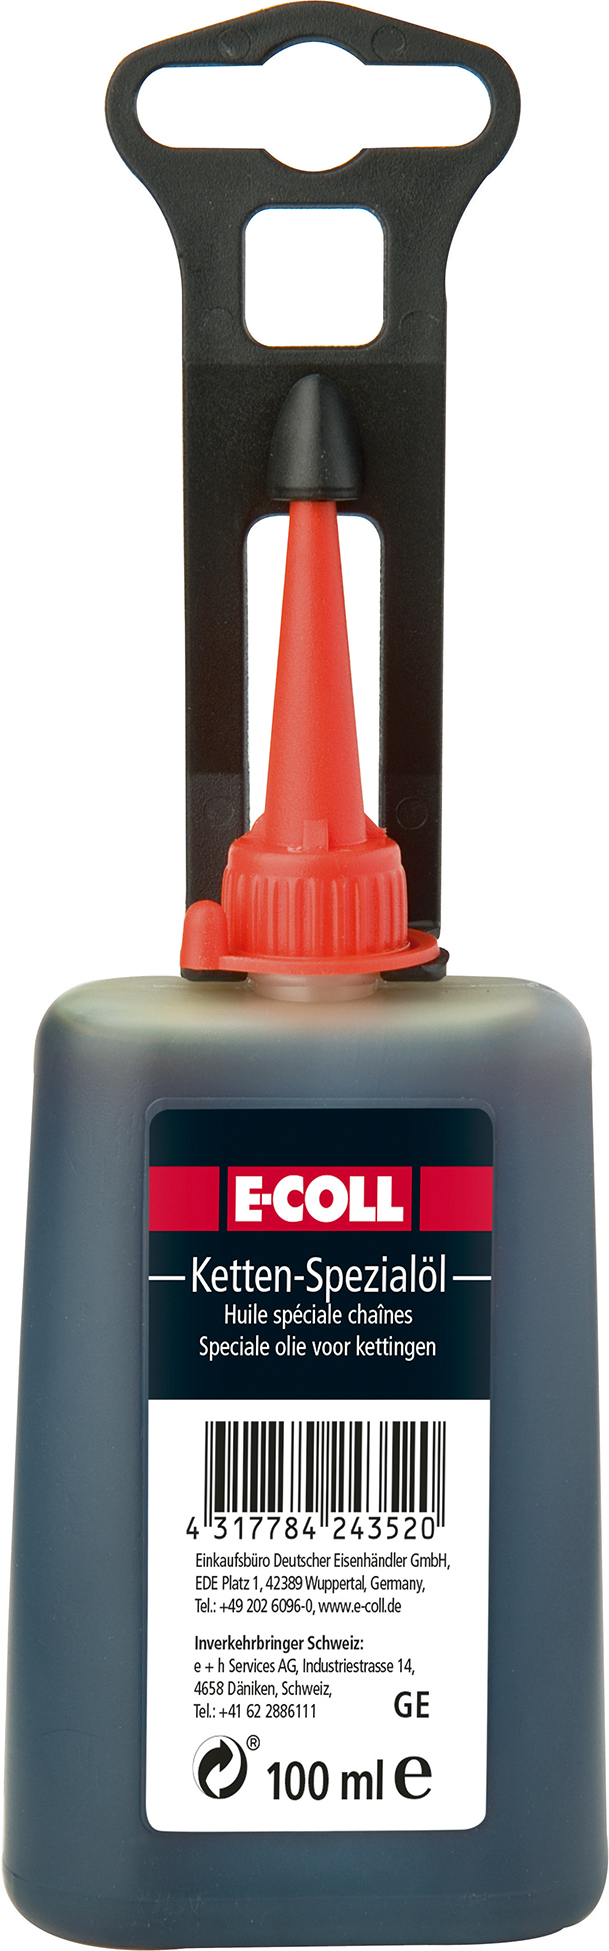 Picture of Ketten-Spezialöl 100ml Flasche E-COLL